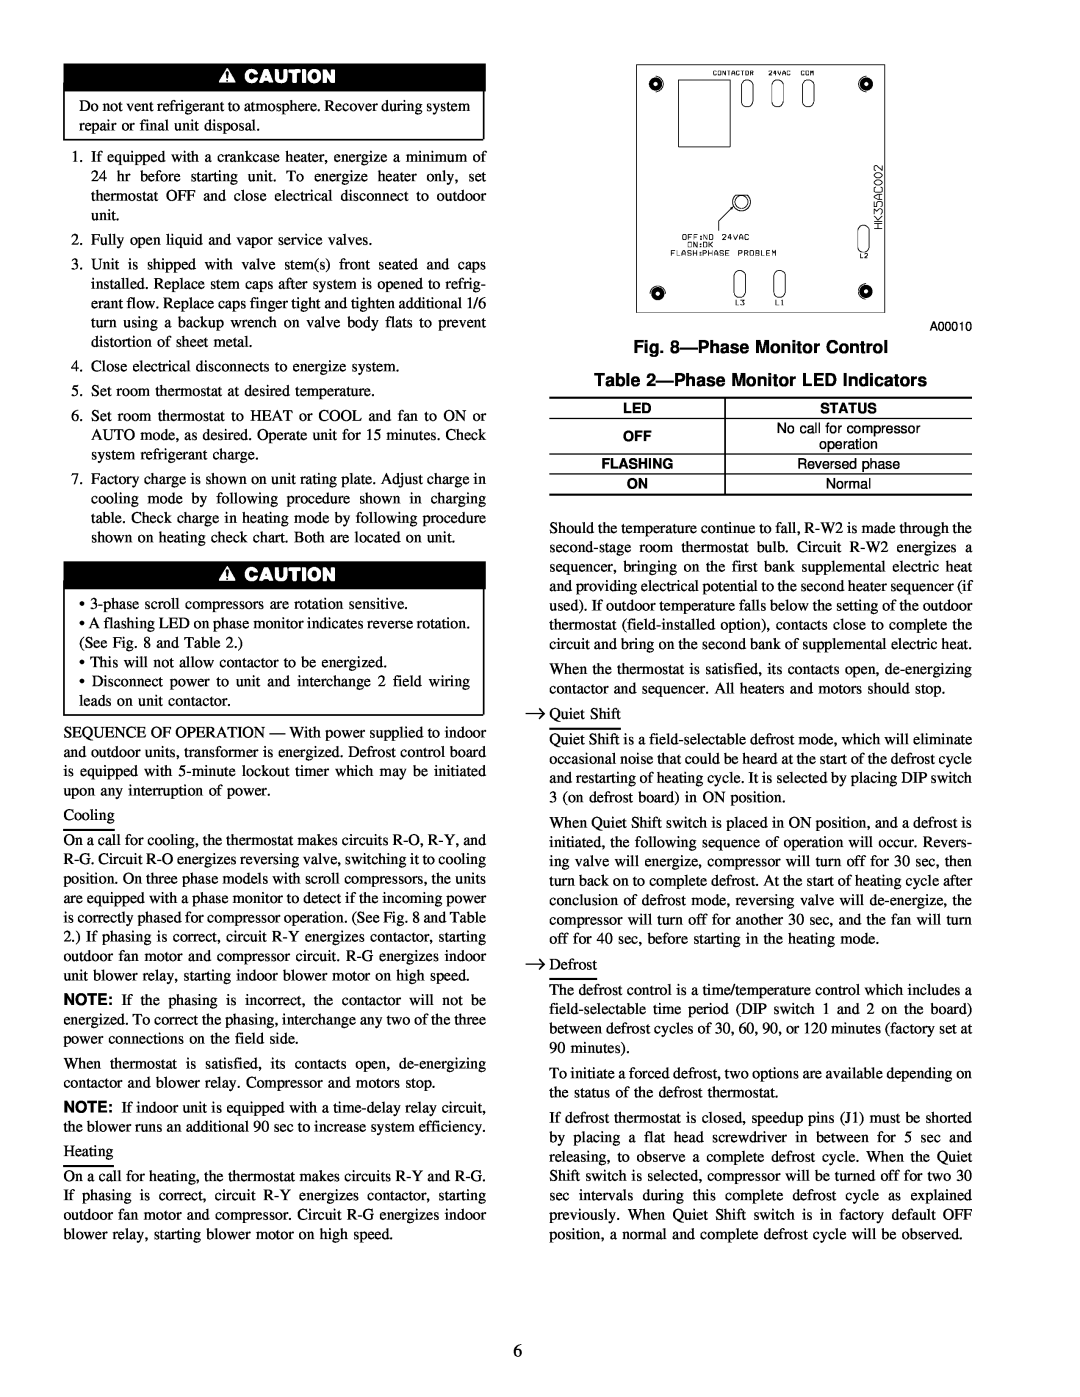 Carrier 38YCX instruction manual PhaseMonitor Control, PhaseMonitor LED Indicators 